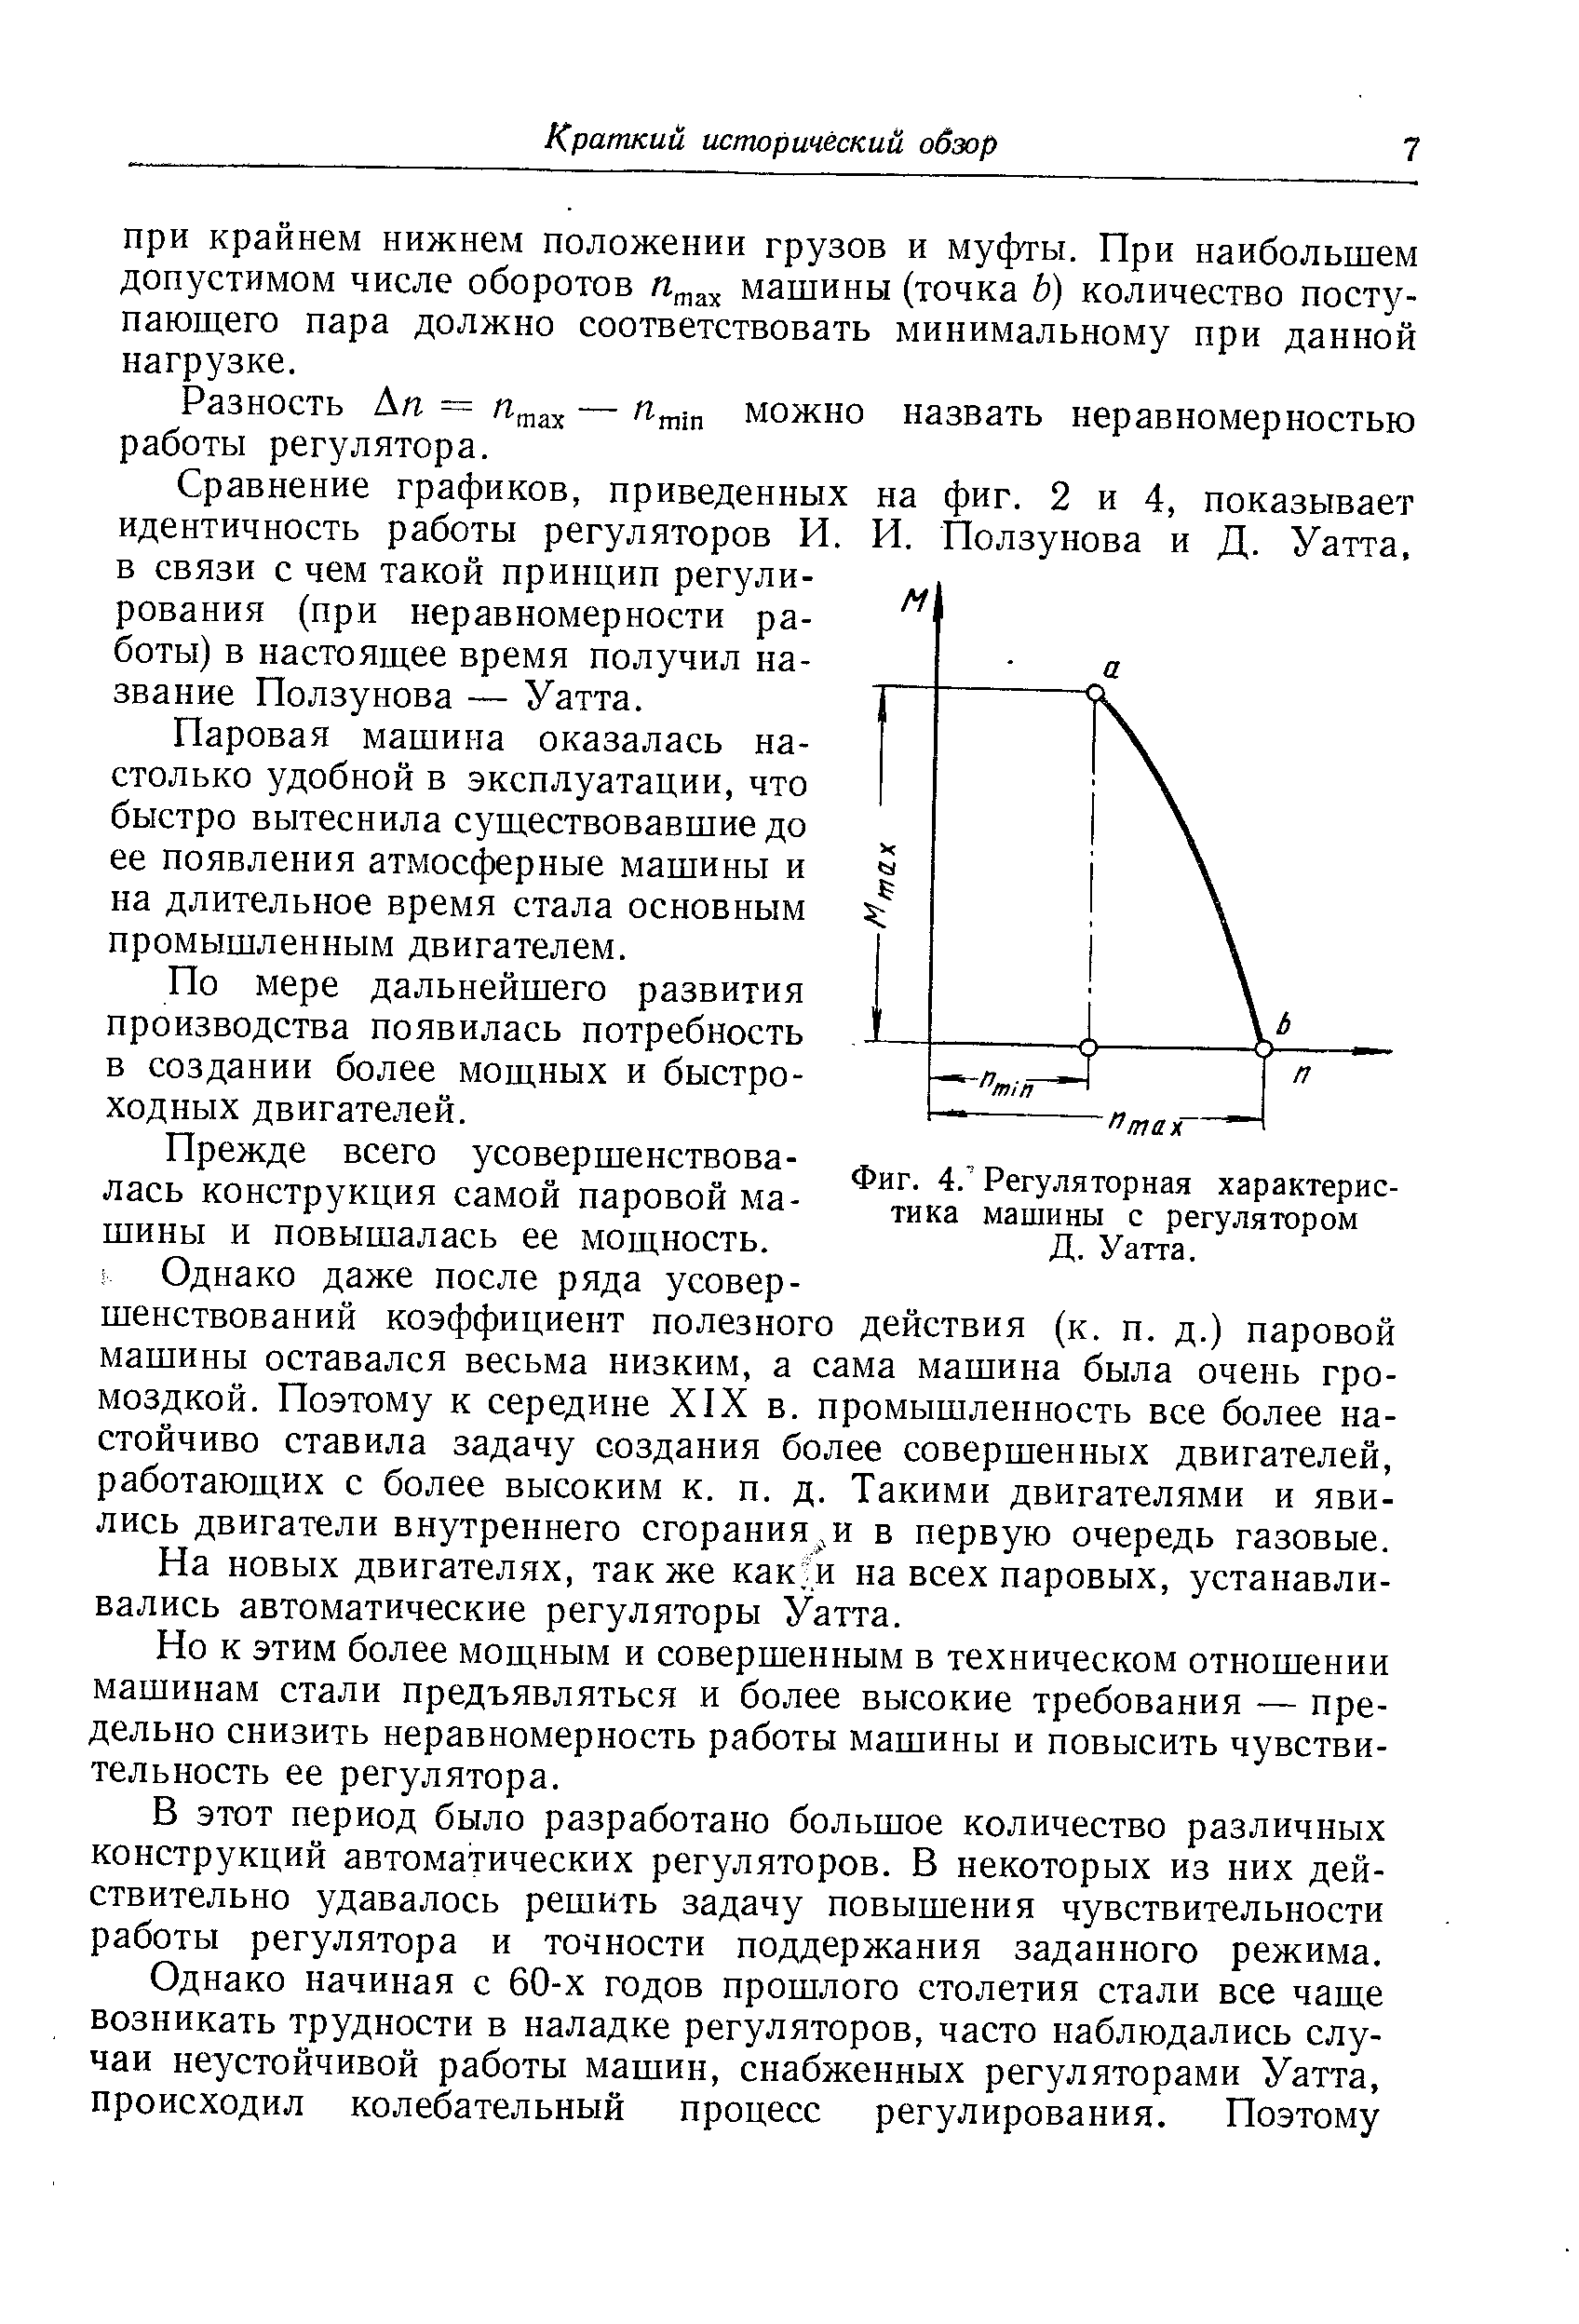 Фиг. 4. Регуляторная характеристика машины с регулятором Д. Уатта.
